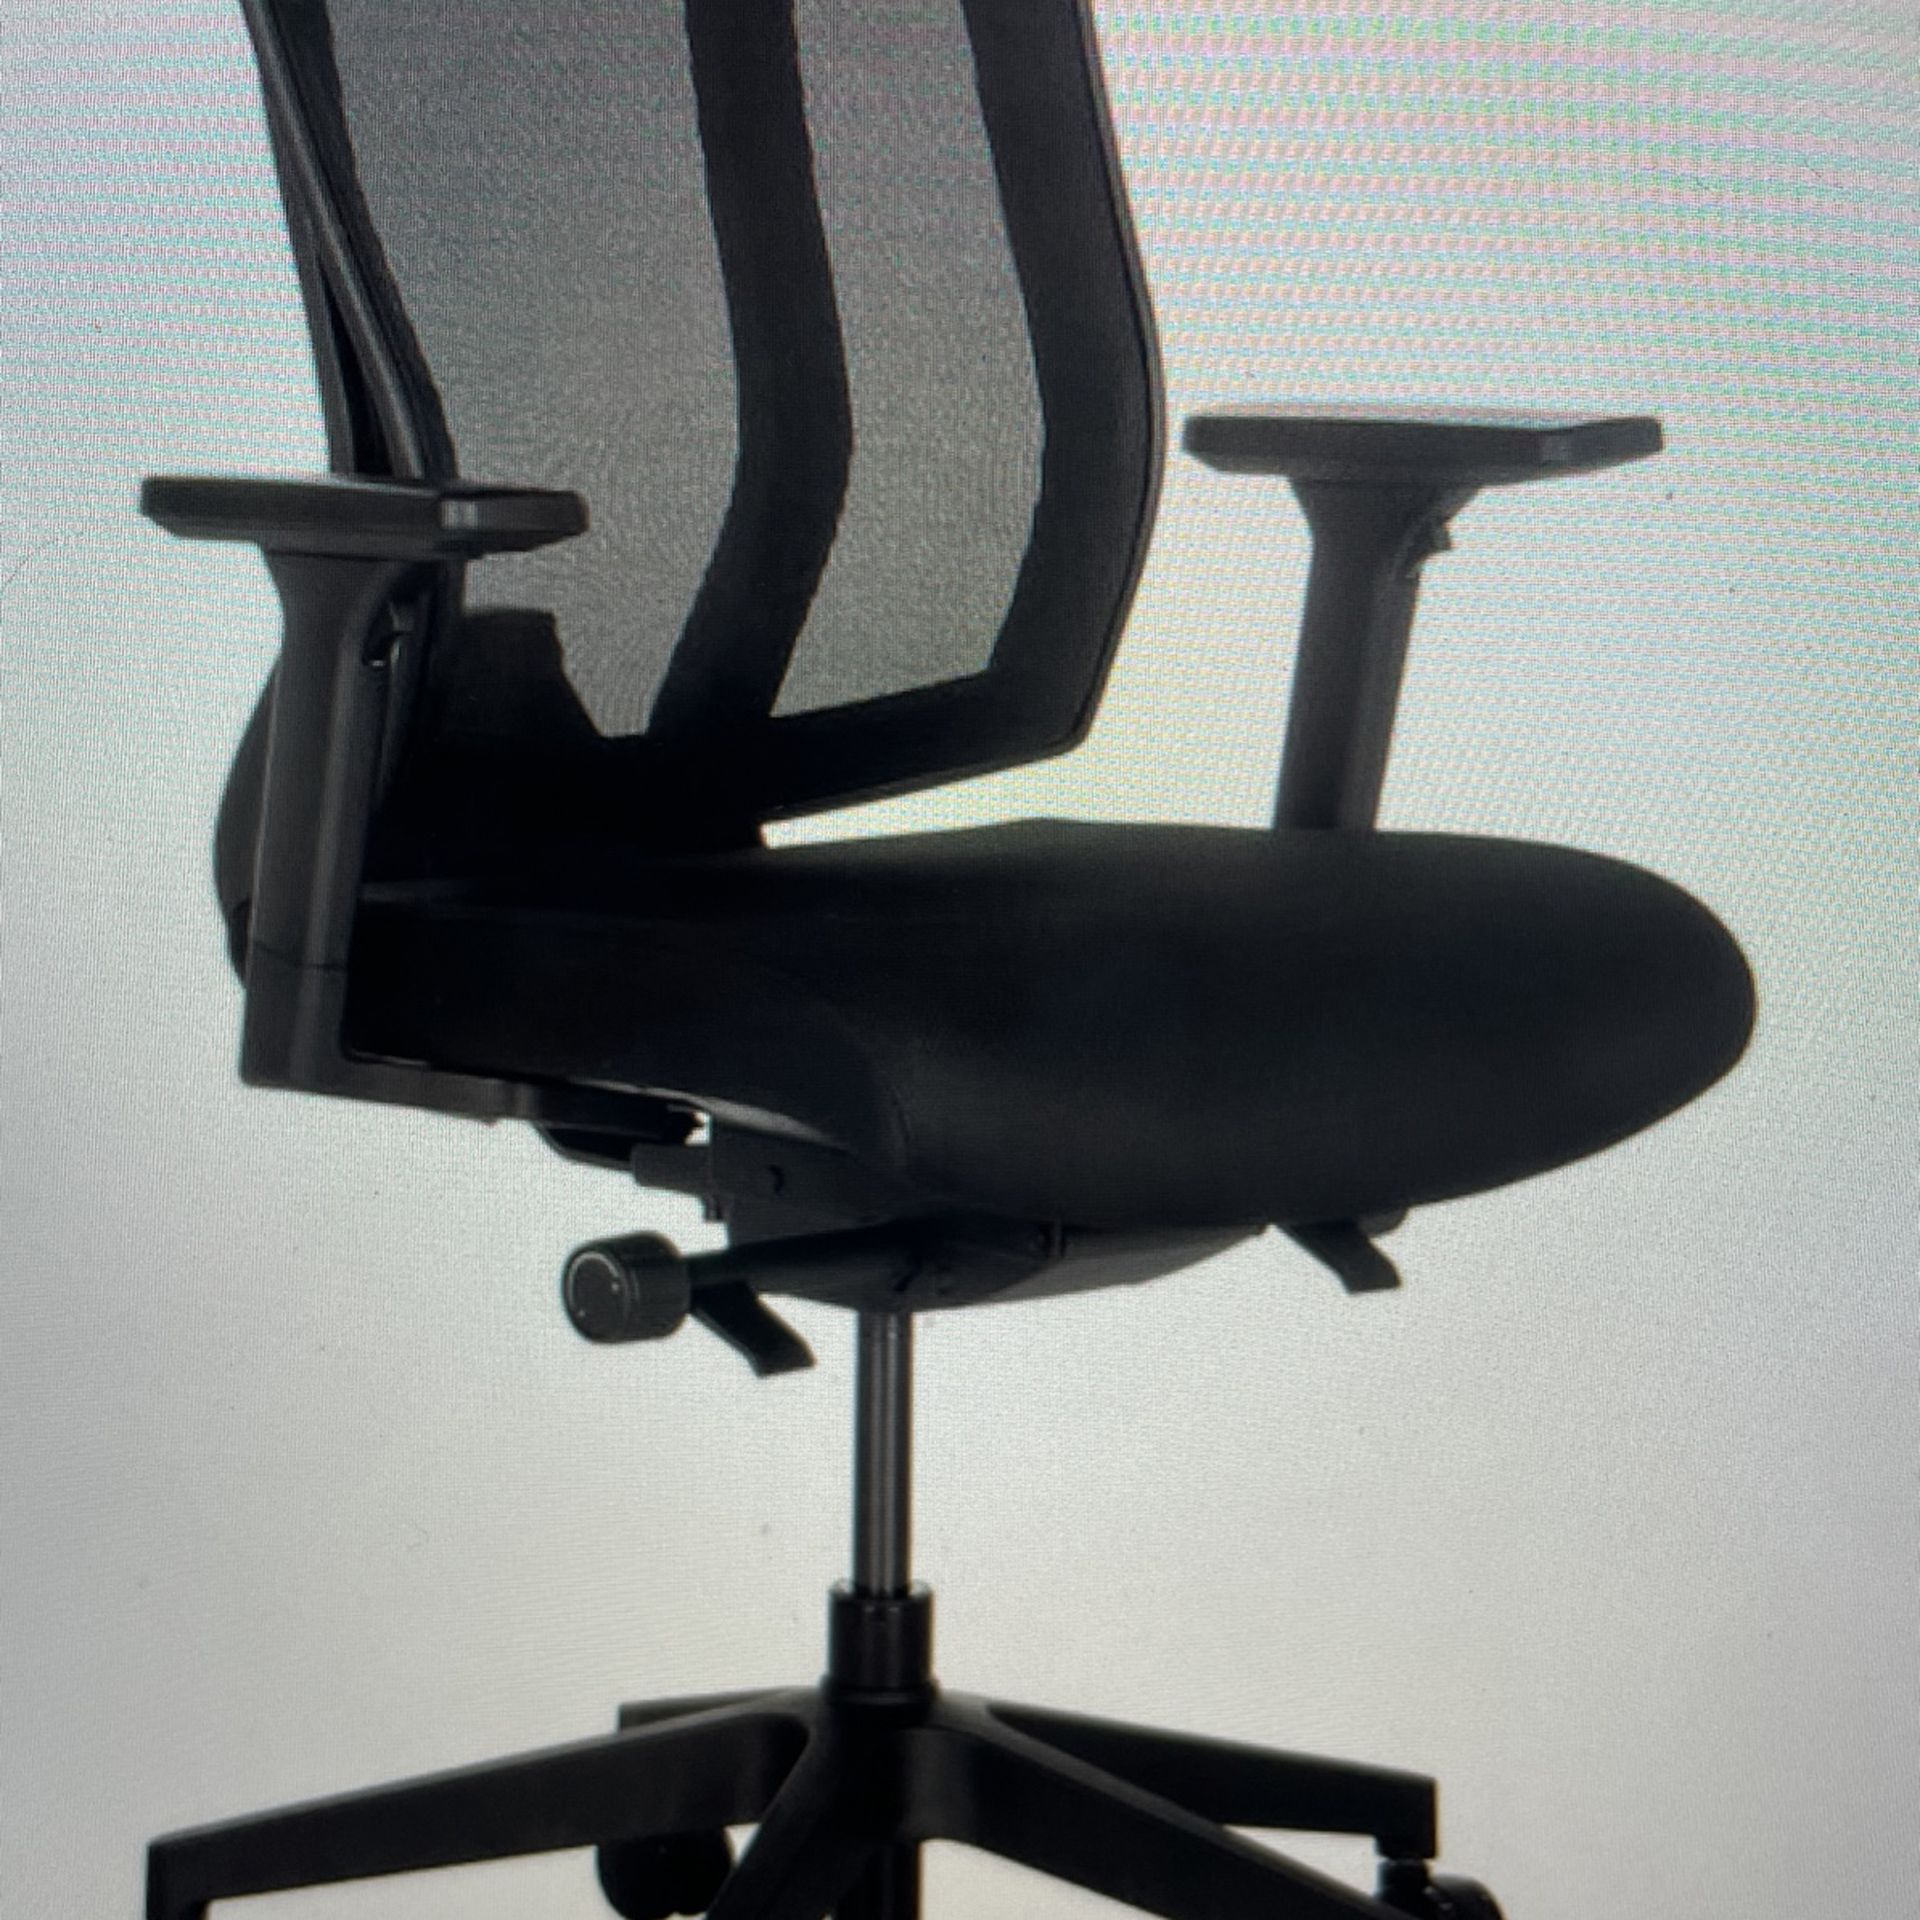 Brand new desk Chair (1)